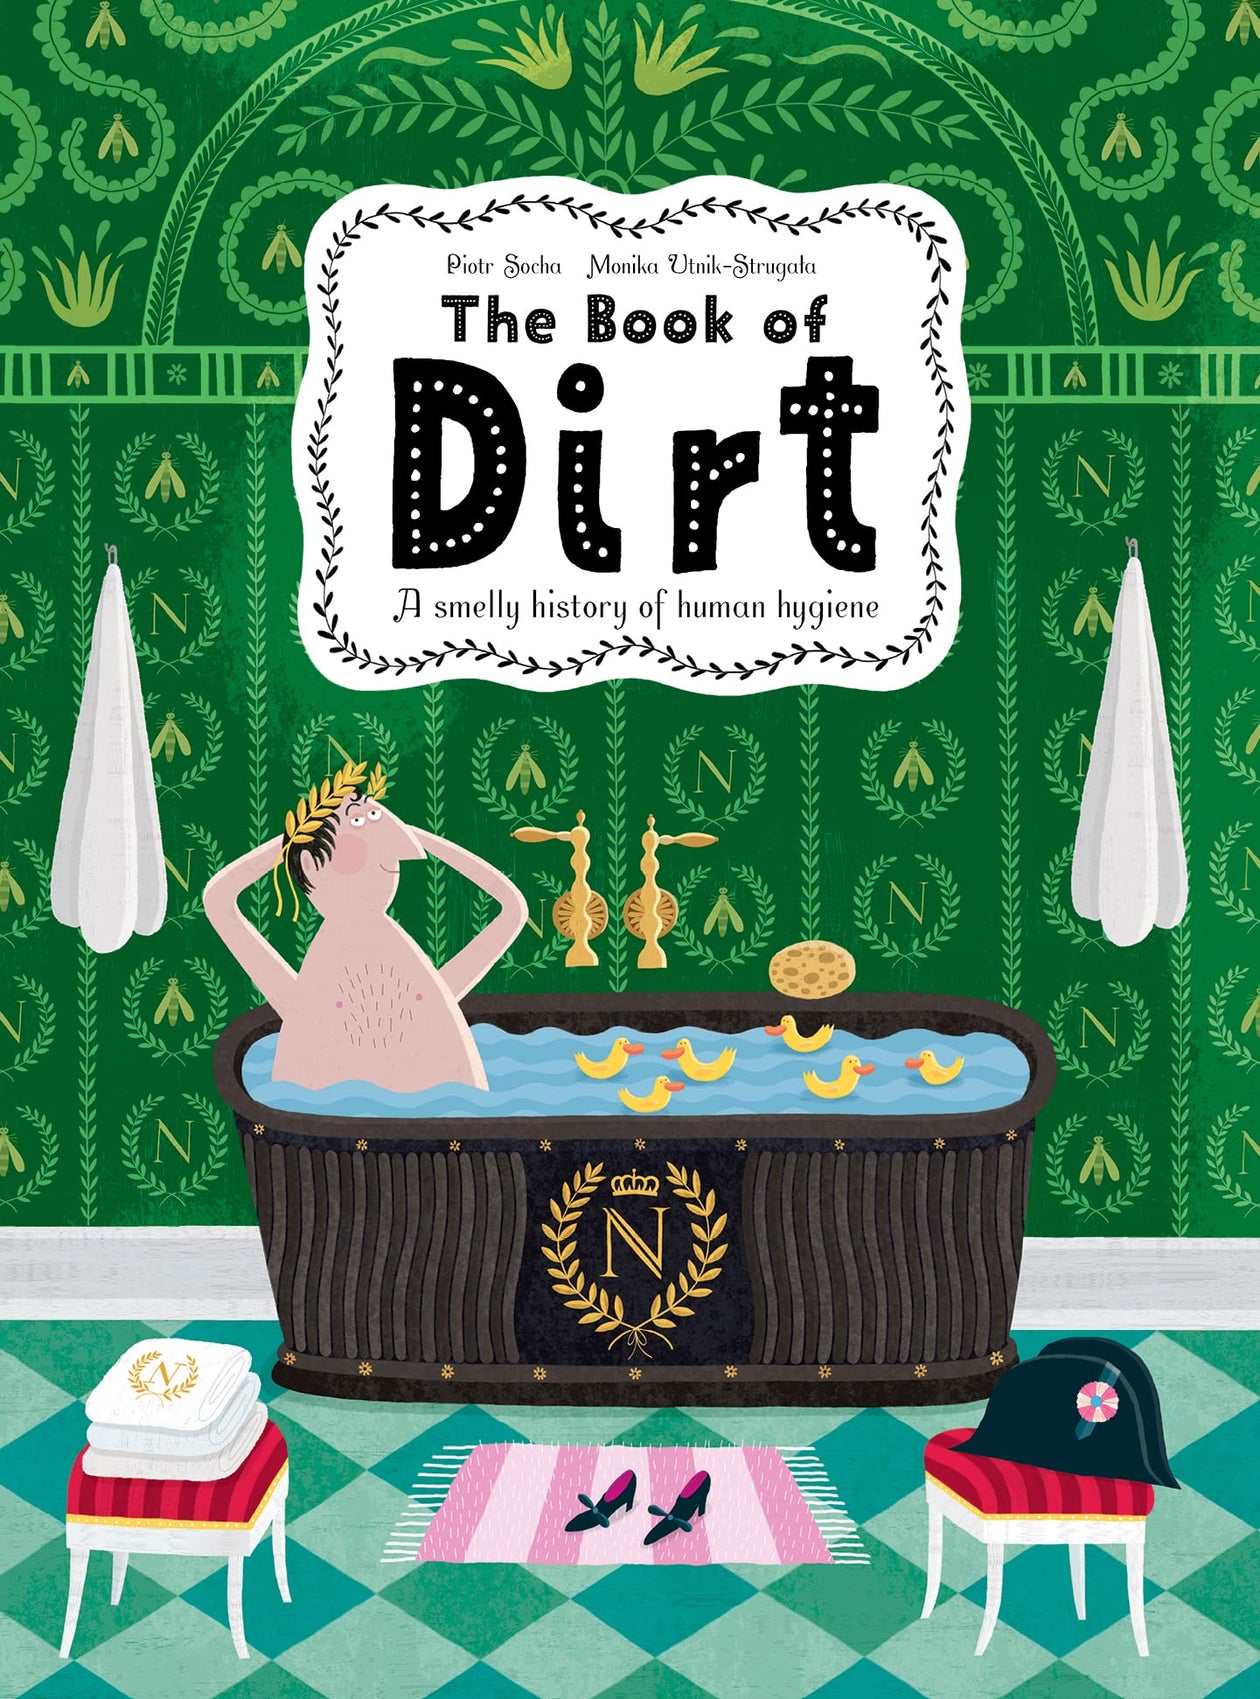 The Book of Dirt by Piotr Socha & Monika Utnik-Strugata